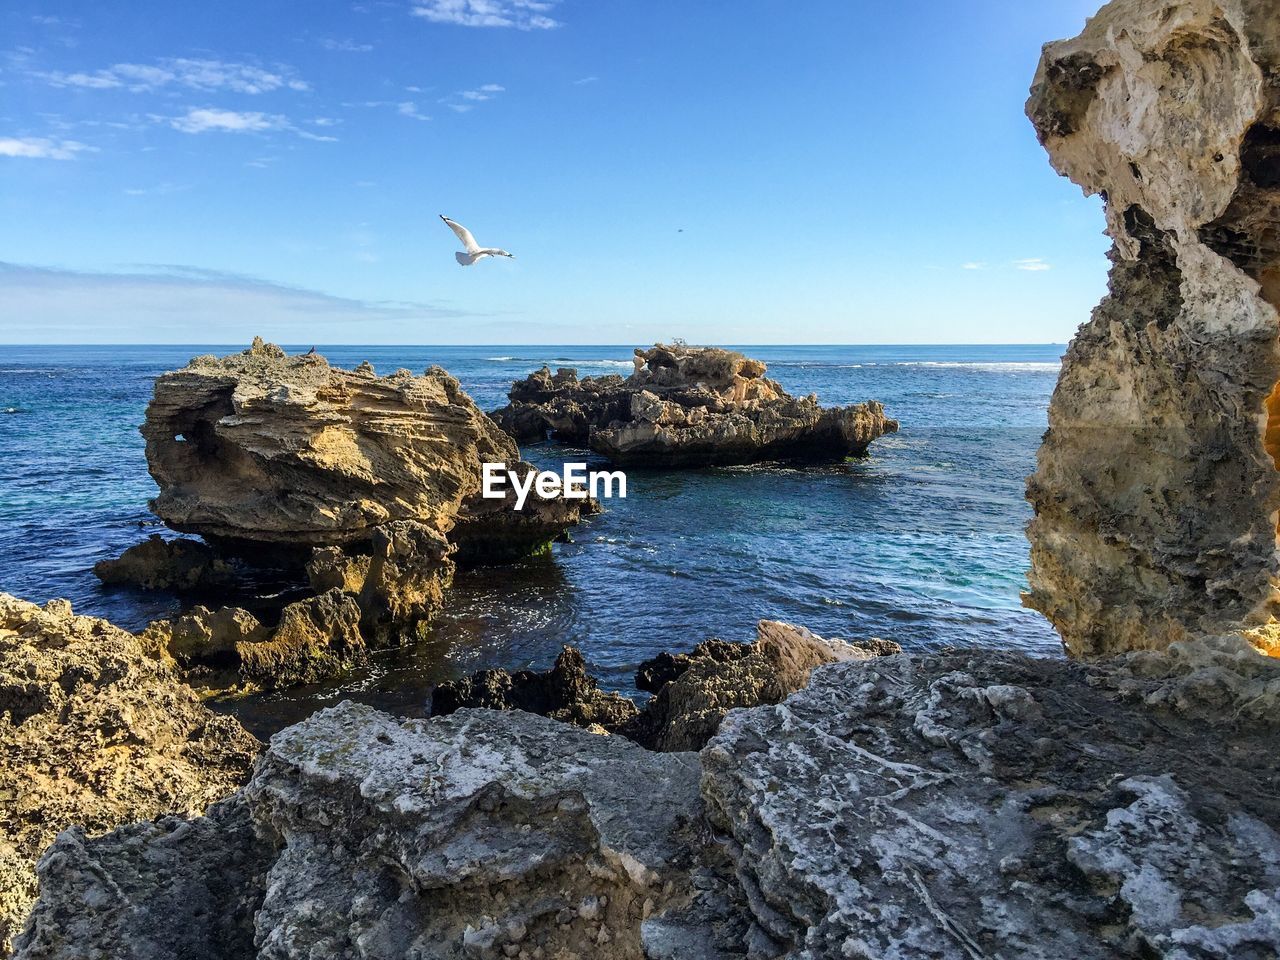 Seagull flying over rocks in sea against sky